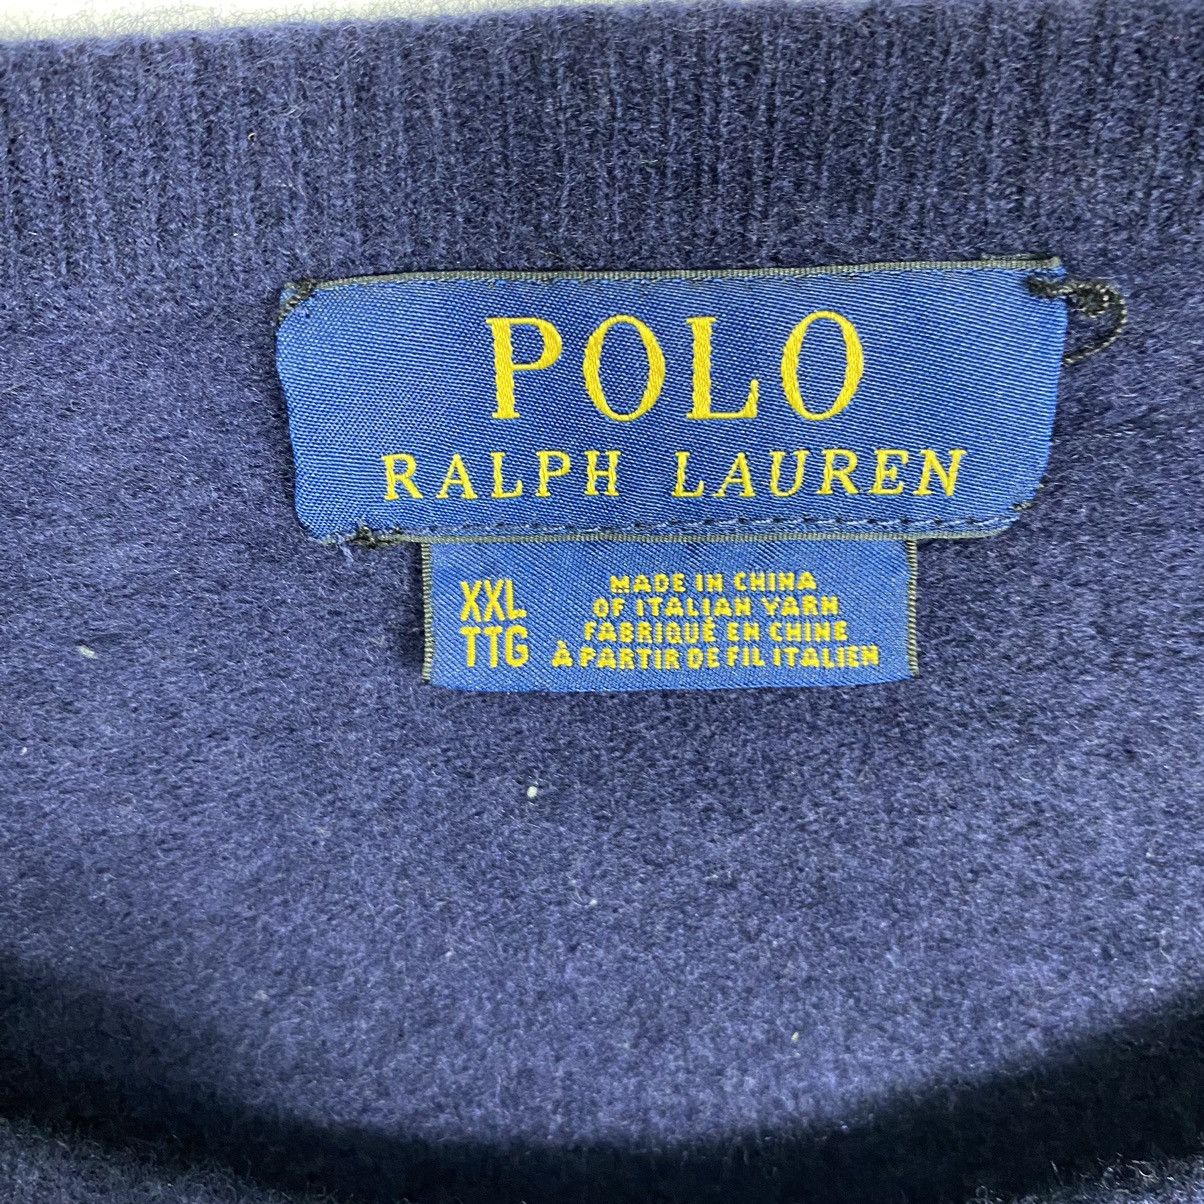 Vintage Polo Ralph Lauren Knit Sweatshirt XXL Size - 6